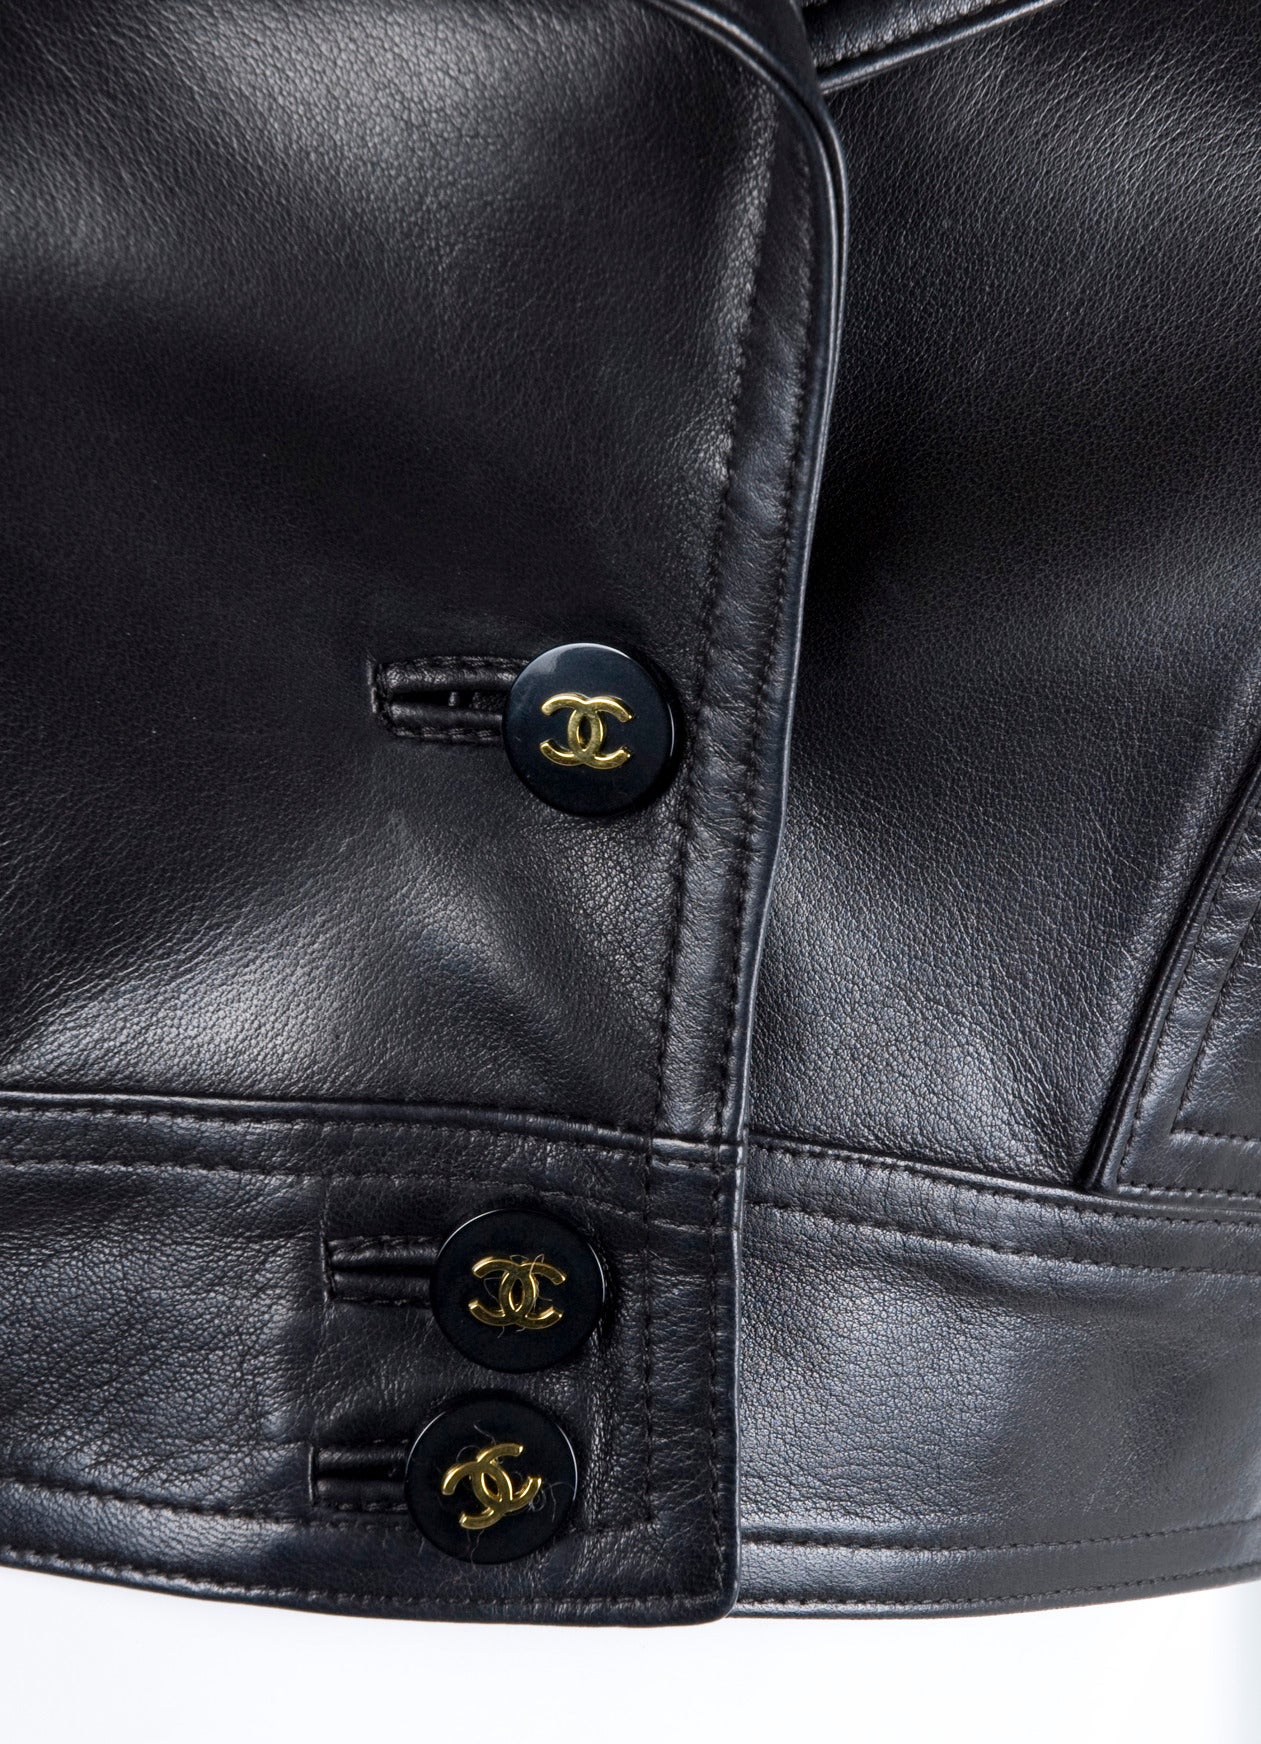 Women's Rare 1995 Chanel Cropped Black Leather Vest